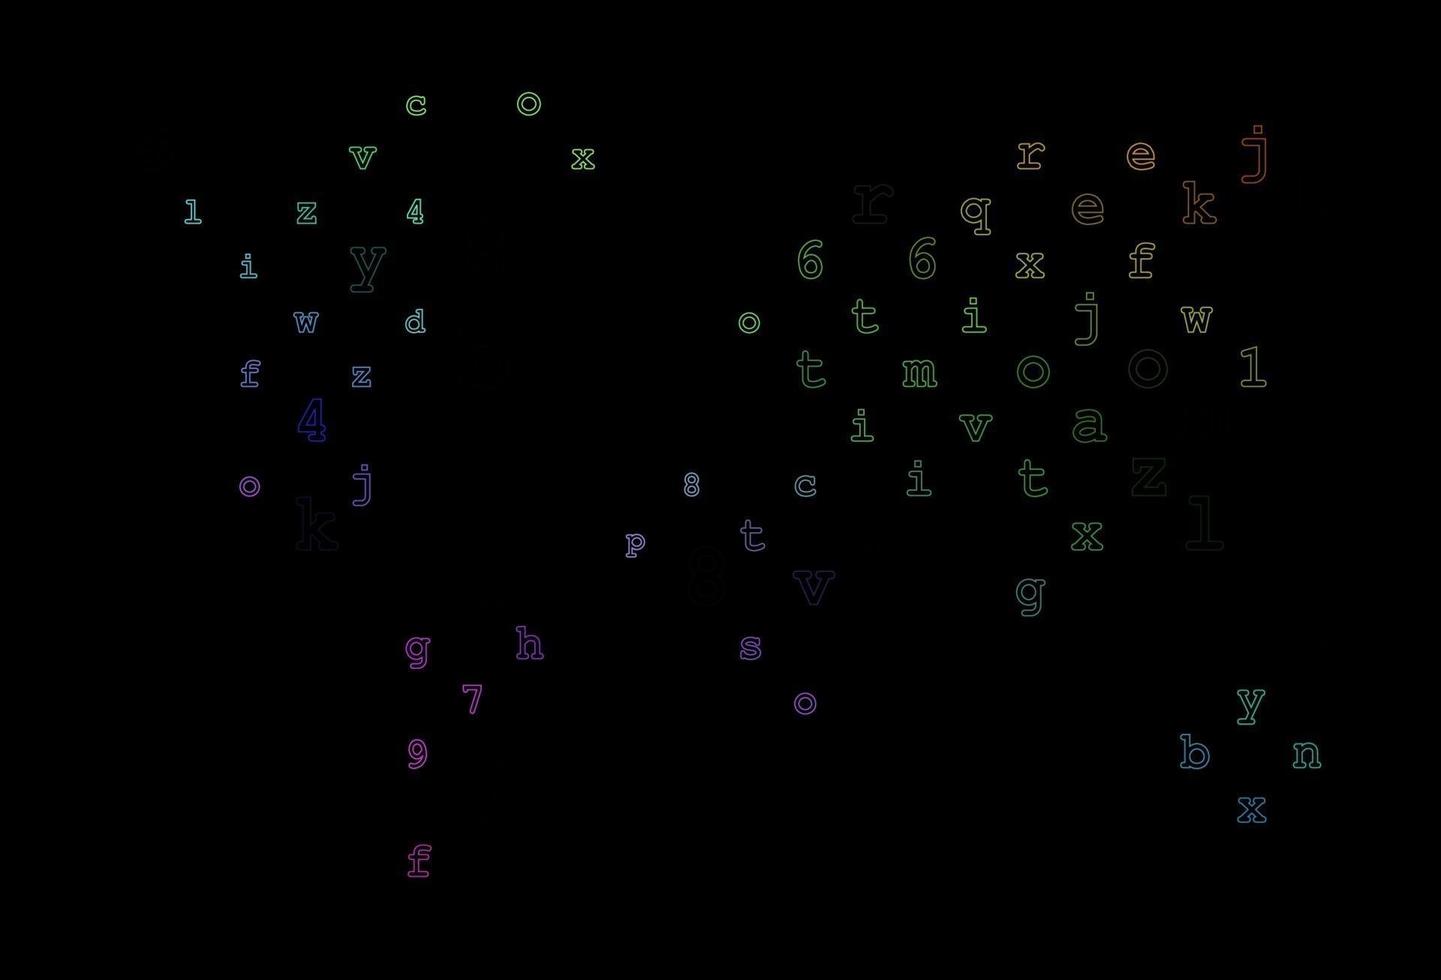 multicolore foncé, motif vectoriel arc-en-ciel avec symboles abc.